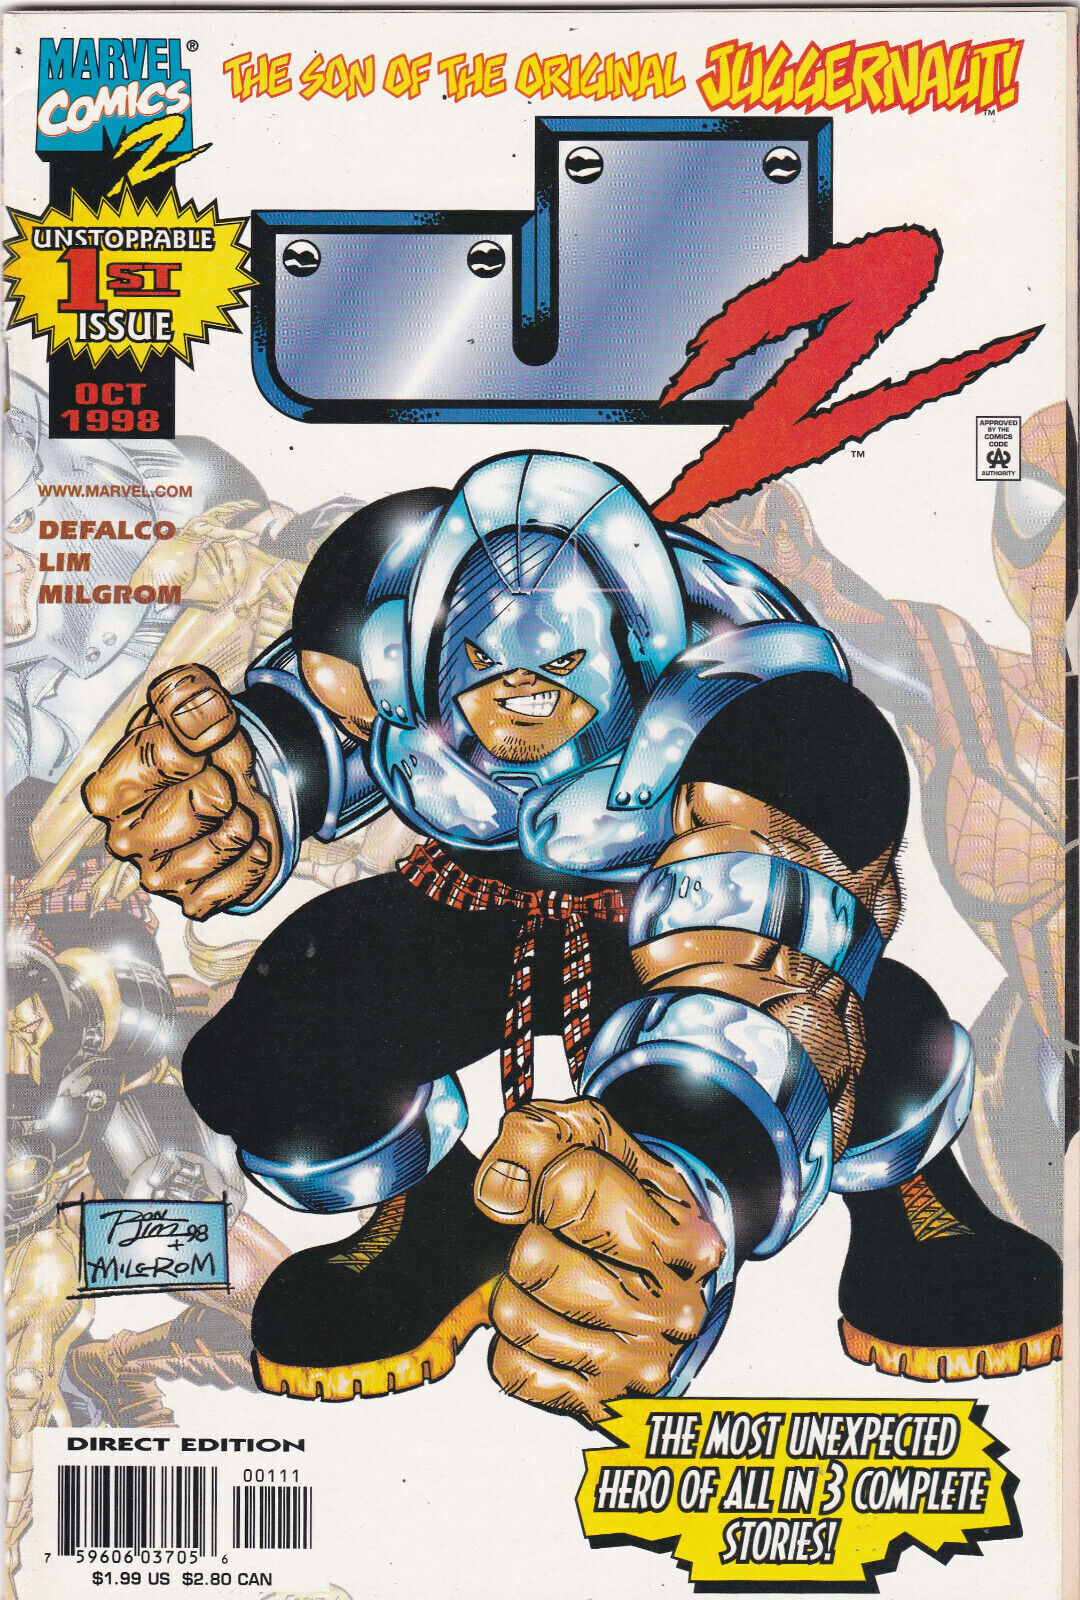 J2 #1 (Marvel, Oct. 1998) Son of the Original Juggernaut DeFalco, Lim & Milgrom